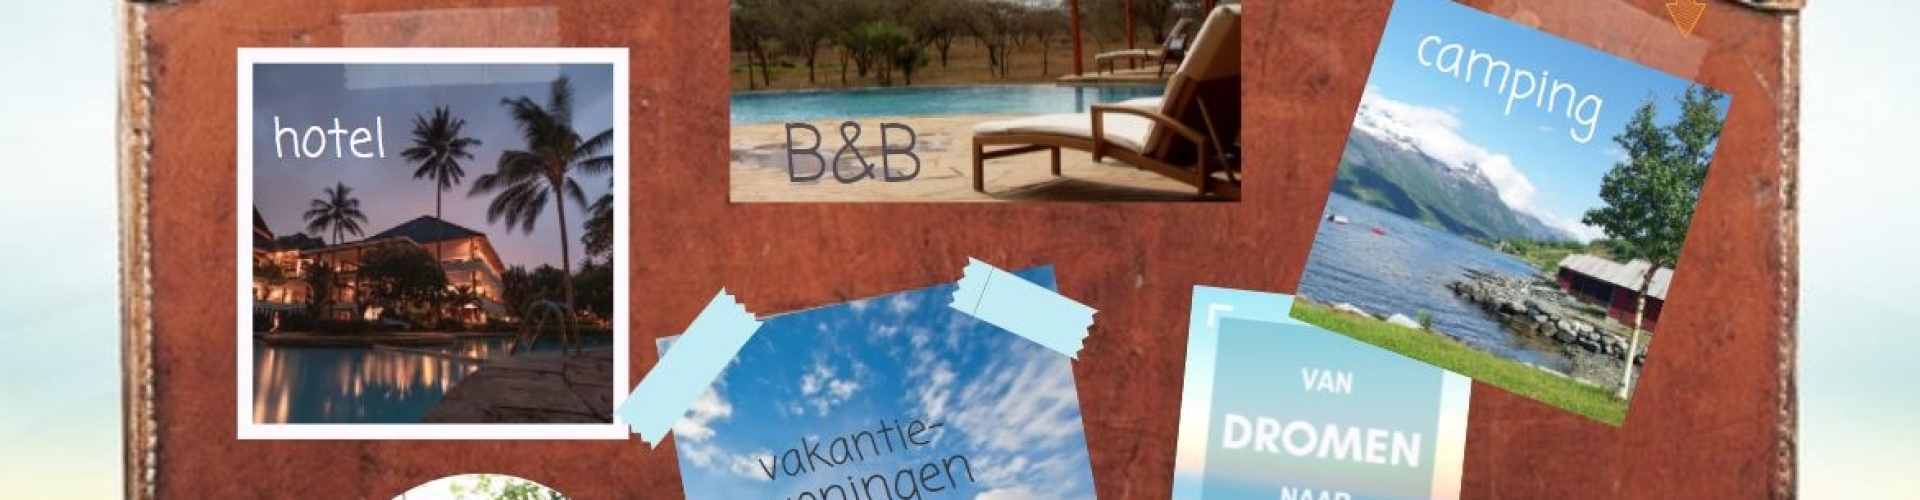 vertrekweek tips beginnen B&B hotel camping vakantiewoningen